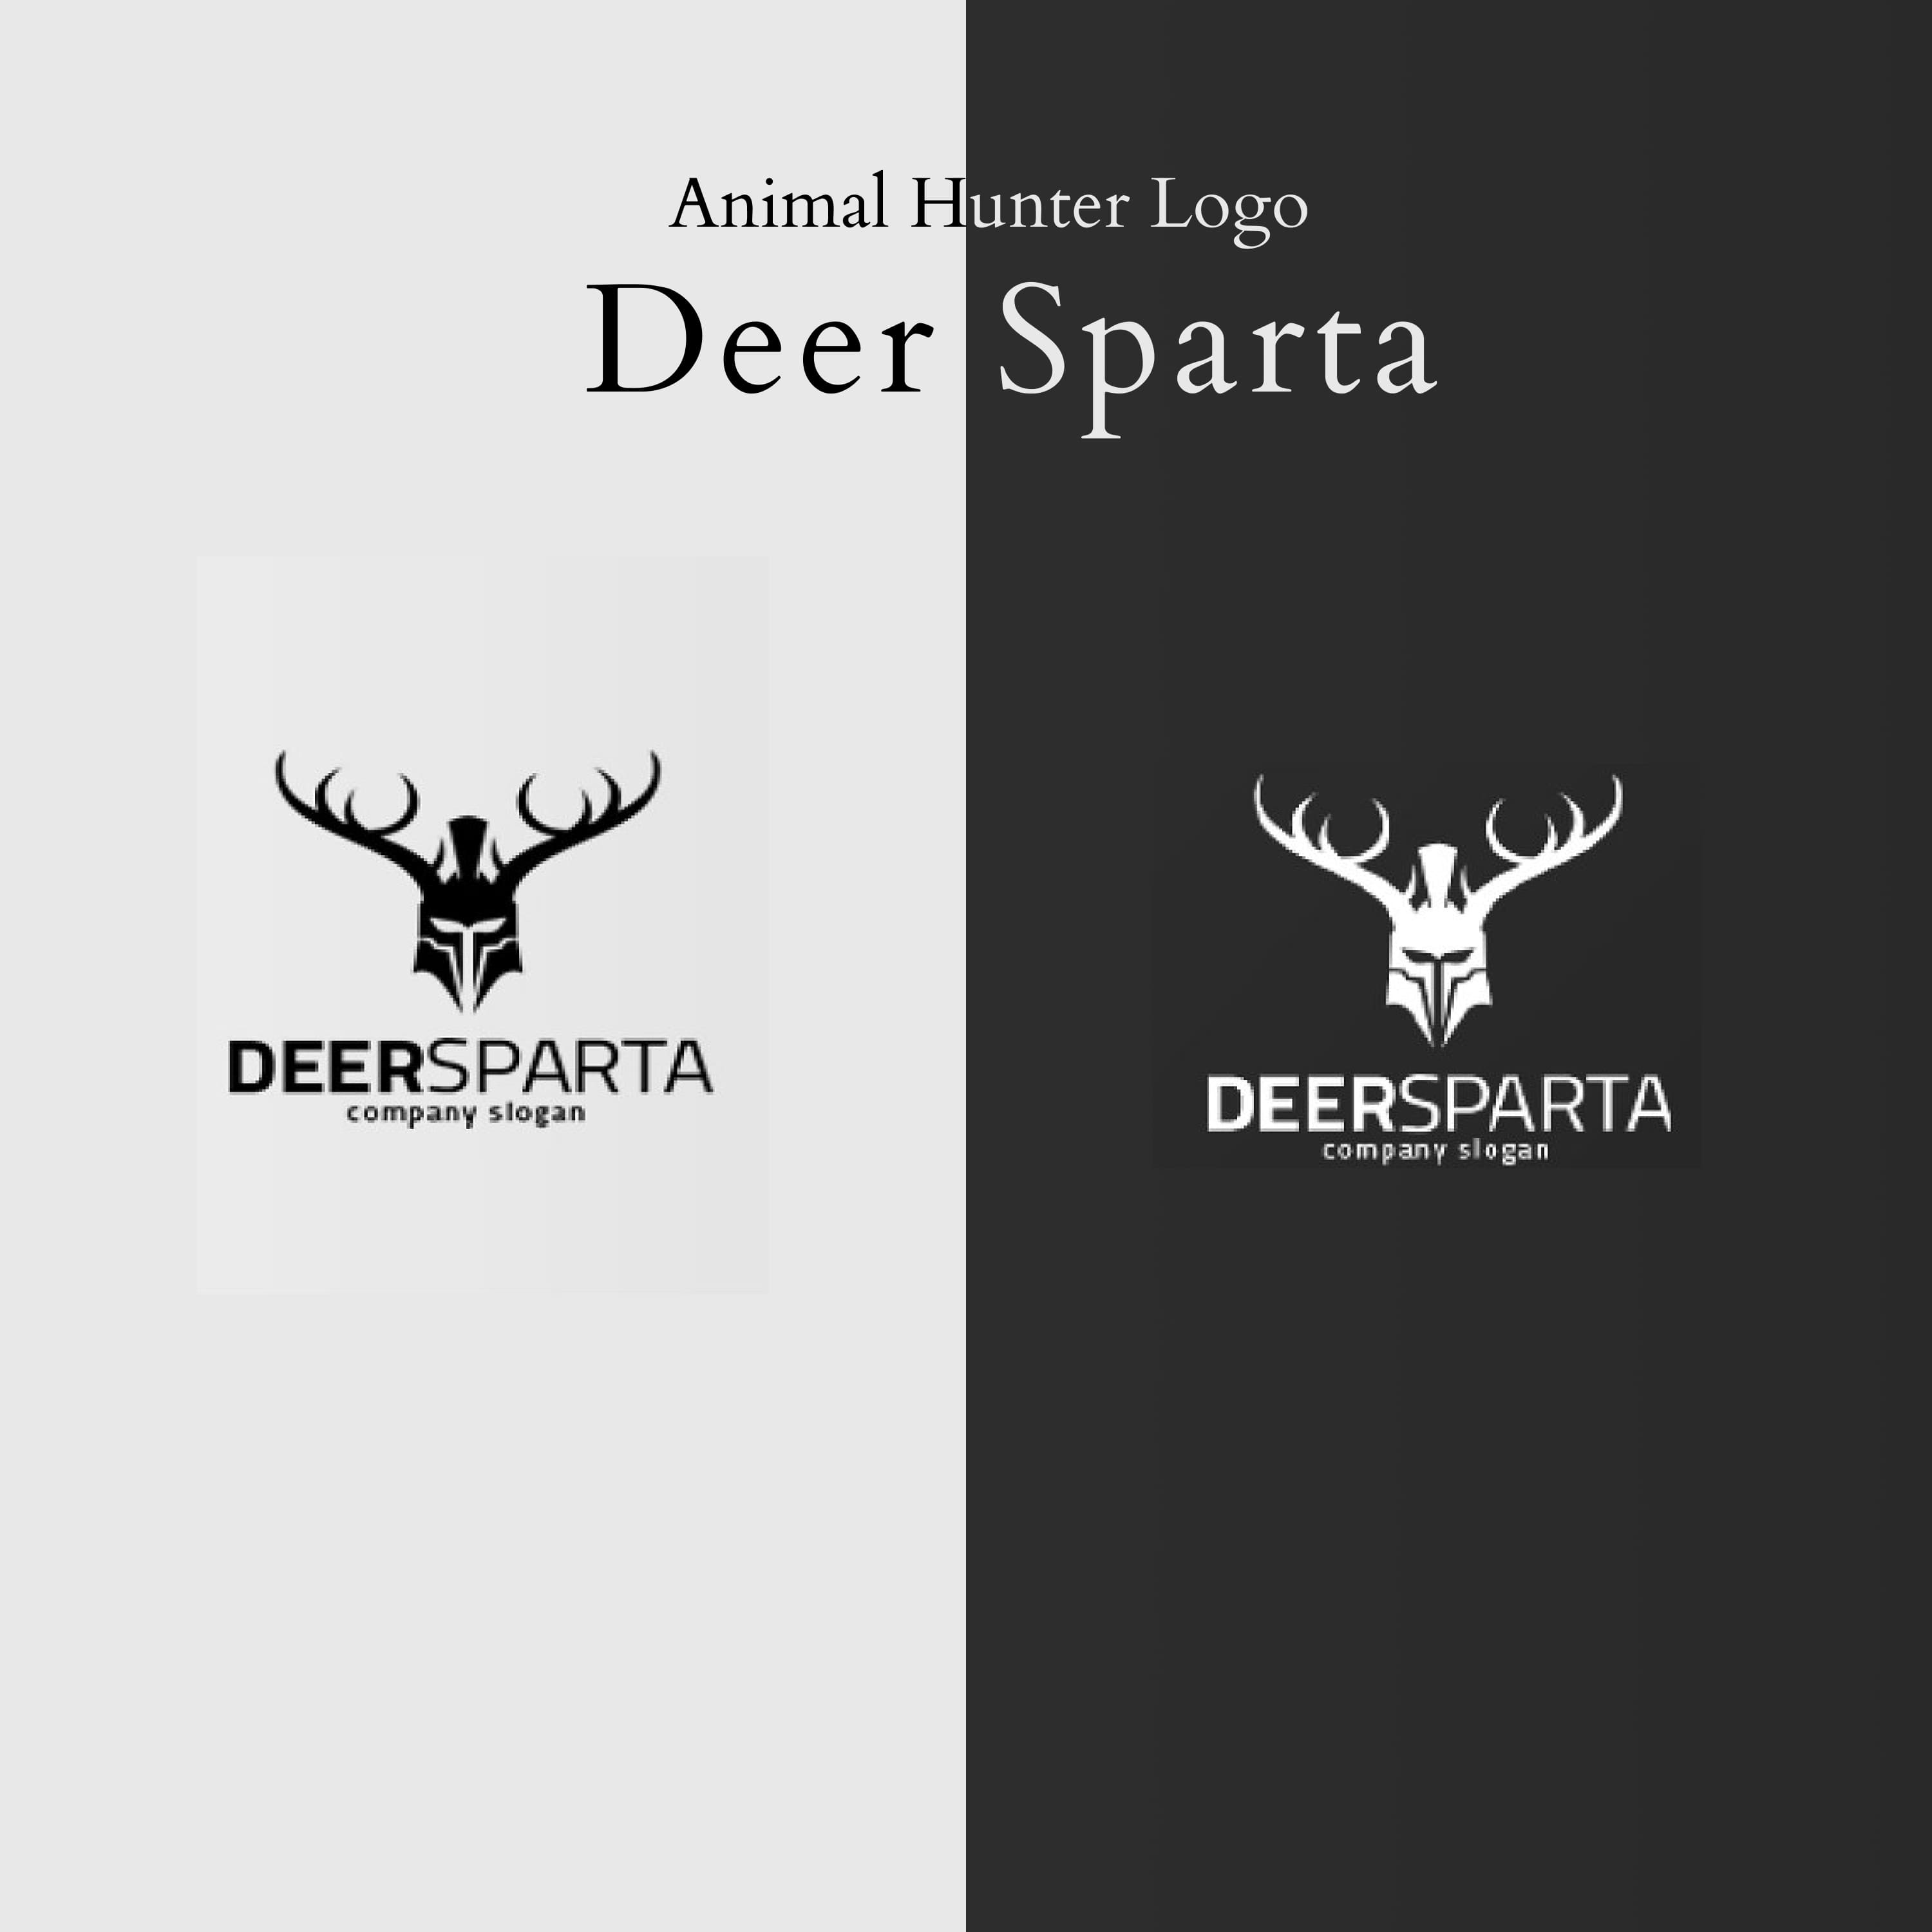 Deer Sparta - Animal Hunter Logo cover.